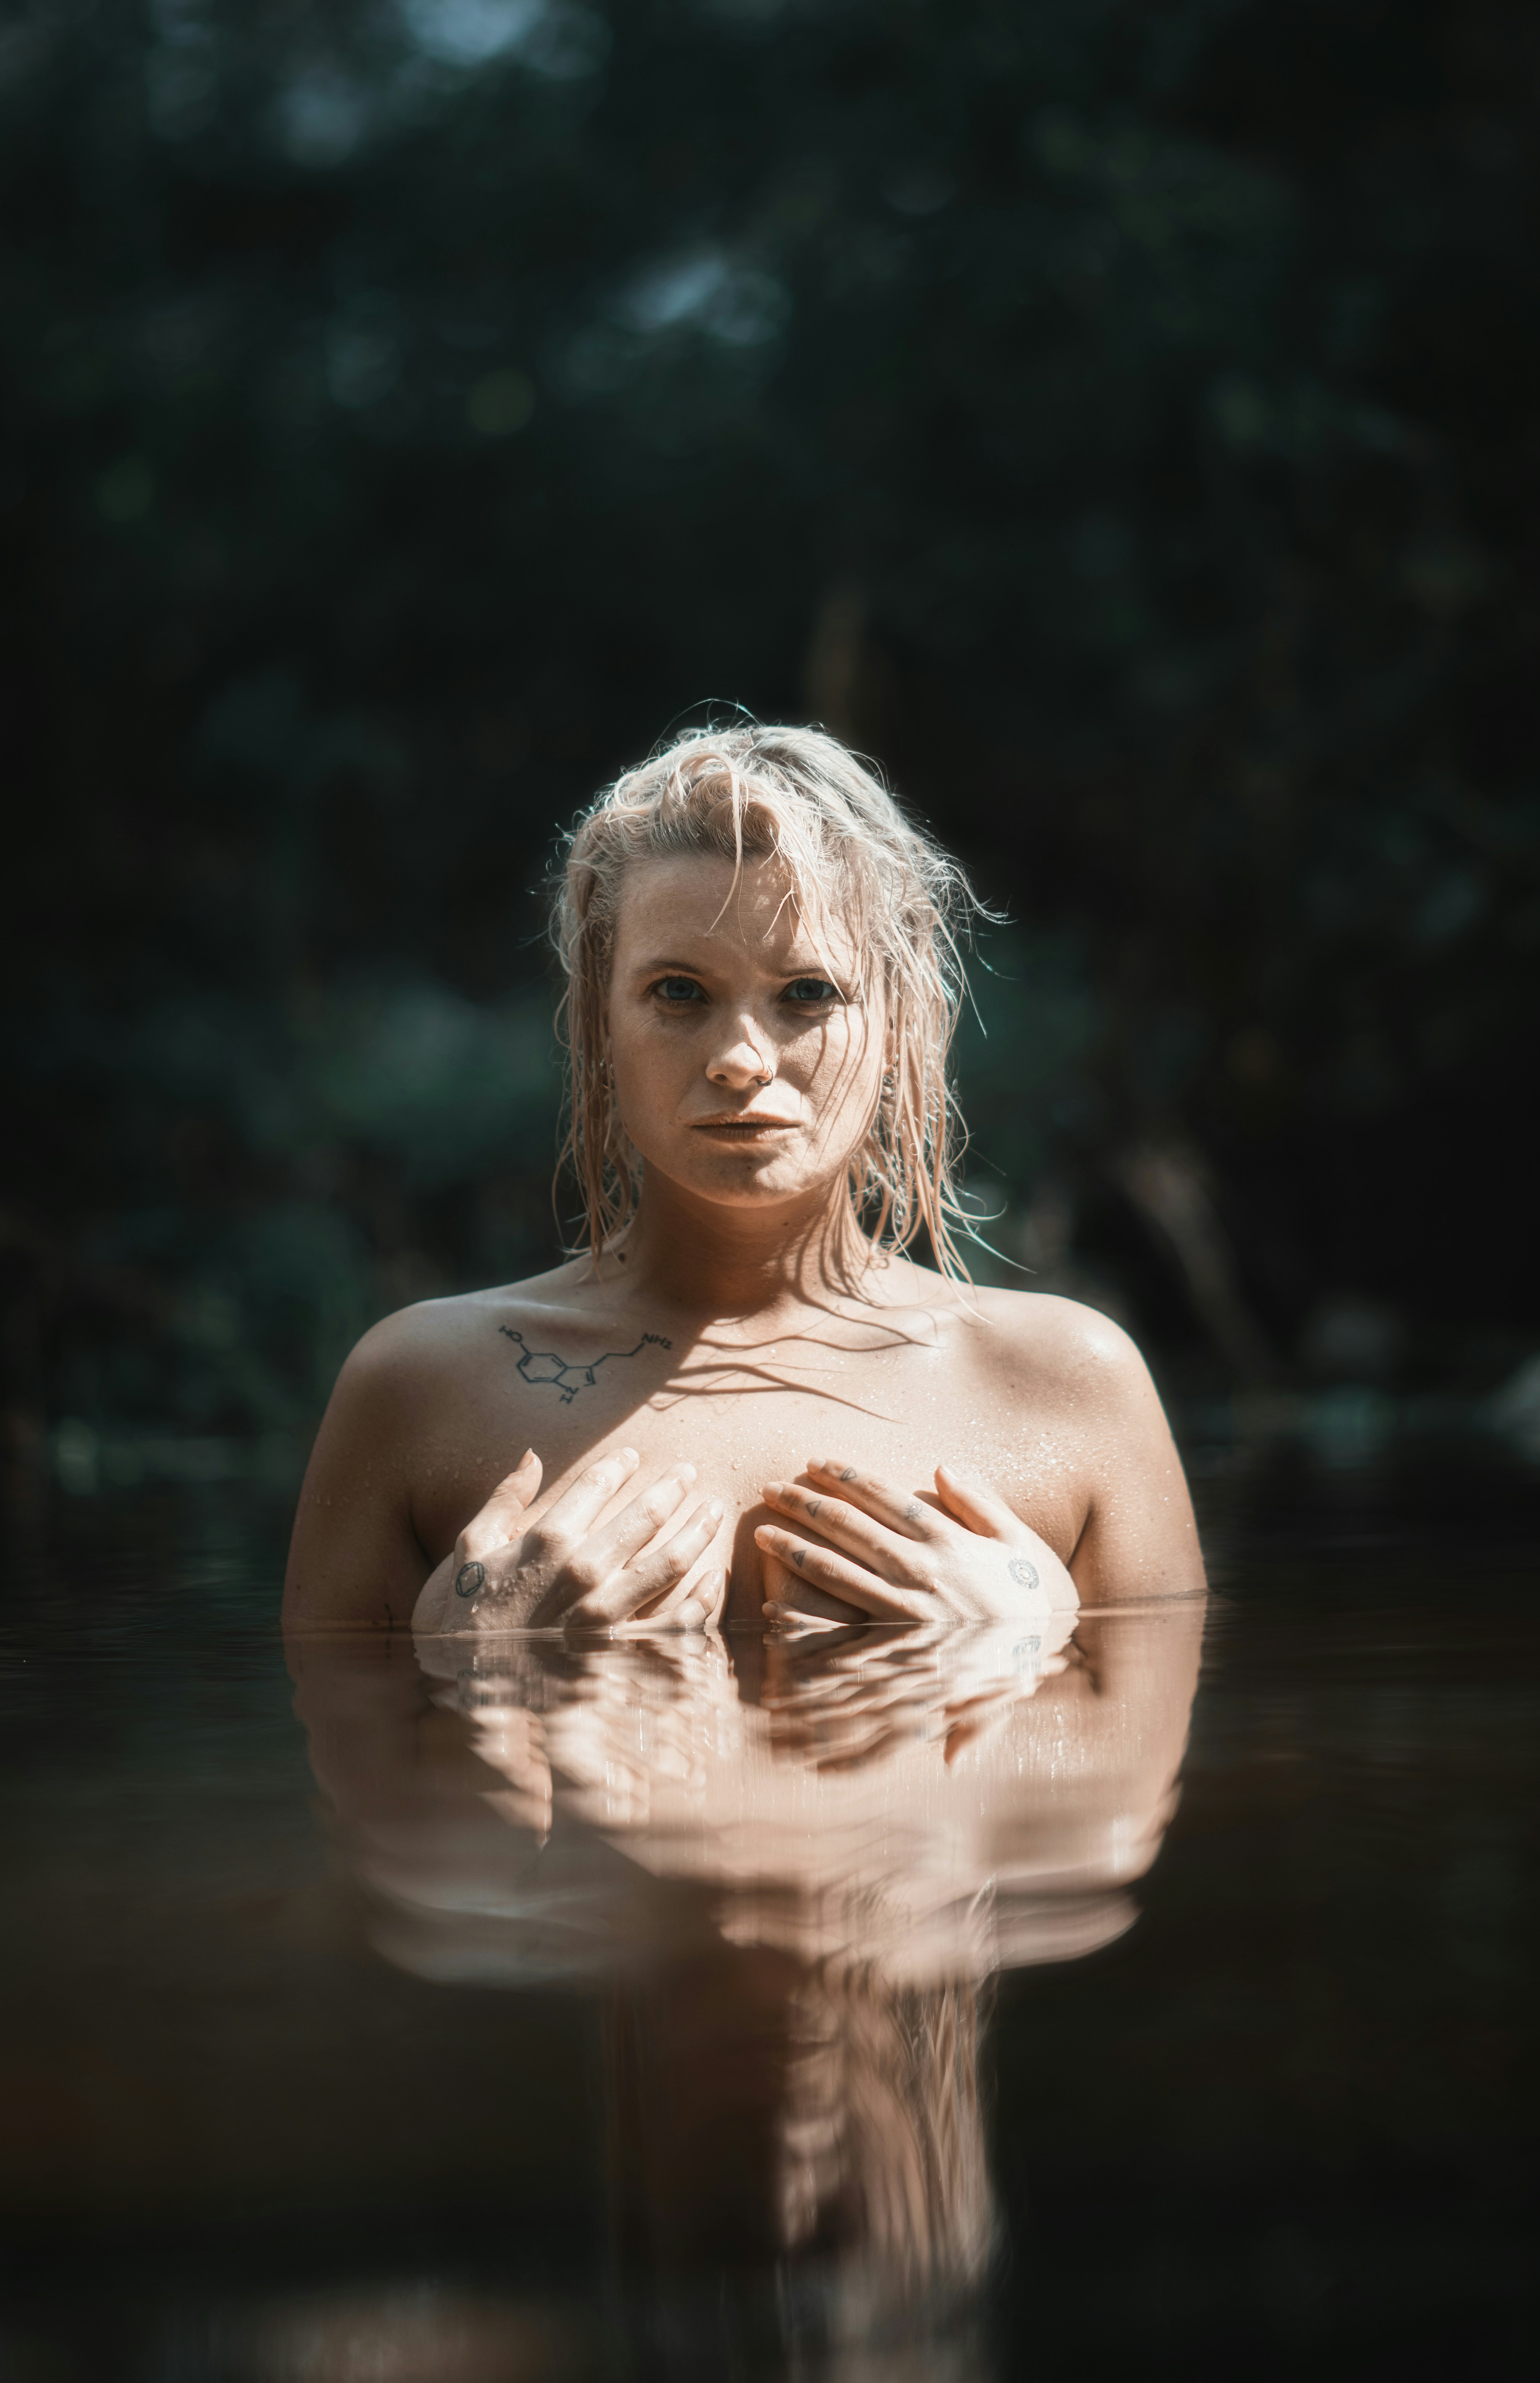 deana myers add topless women wallpapers photo